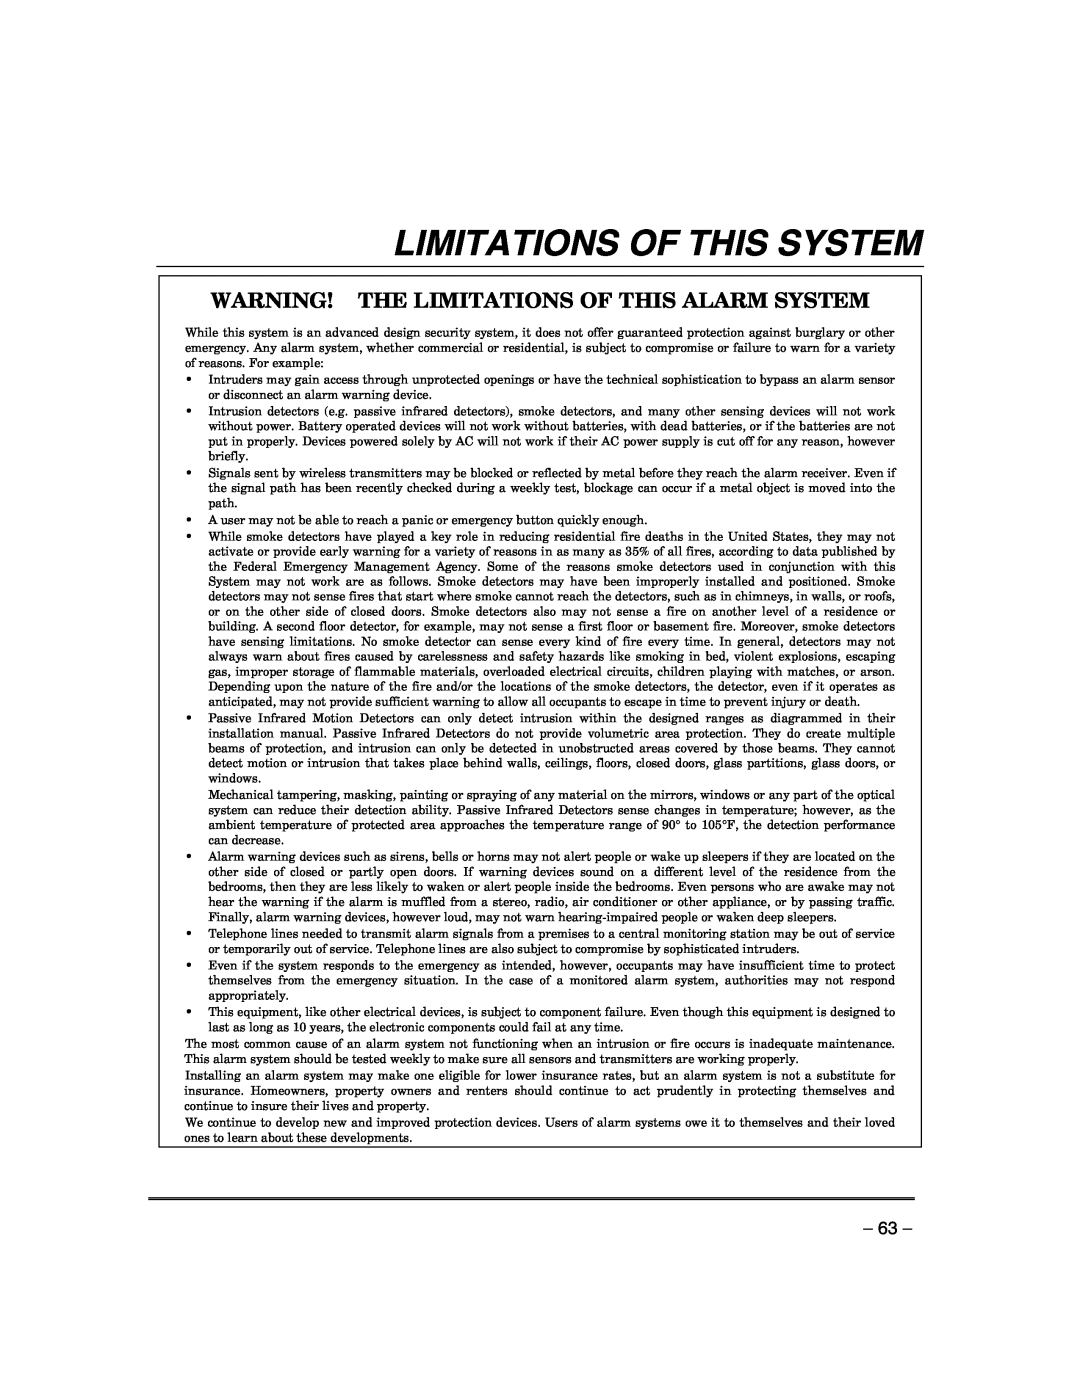 Honeywell VISTA-21IPSIA manual Limitations Of This System, Warning! The Limitations Of This Alarm System 